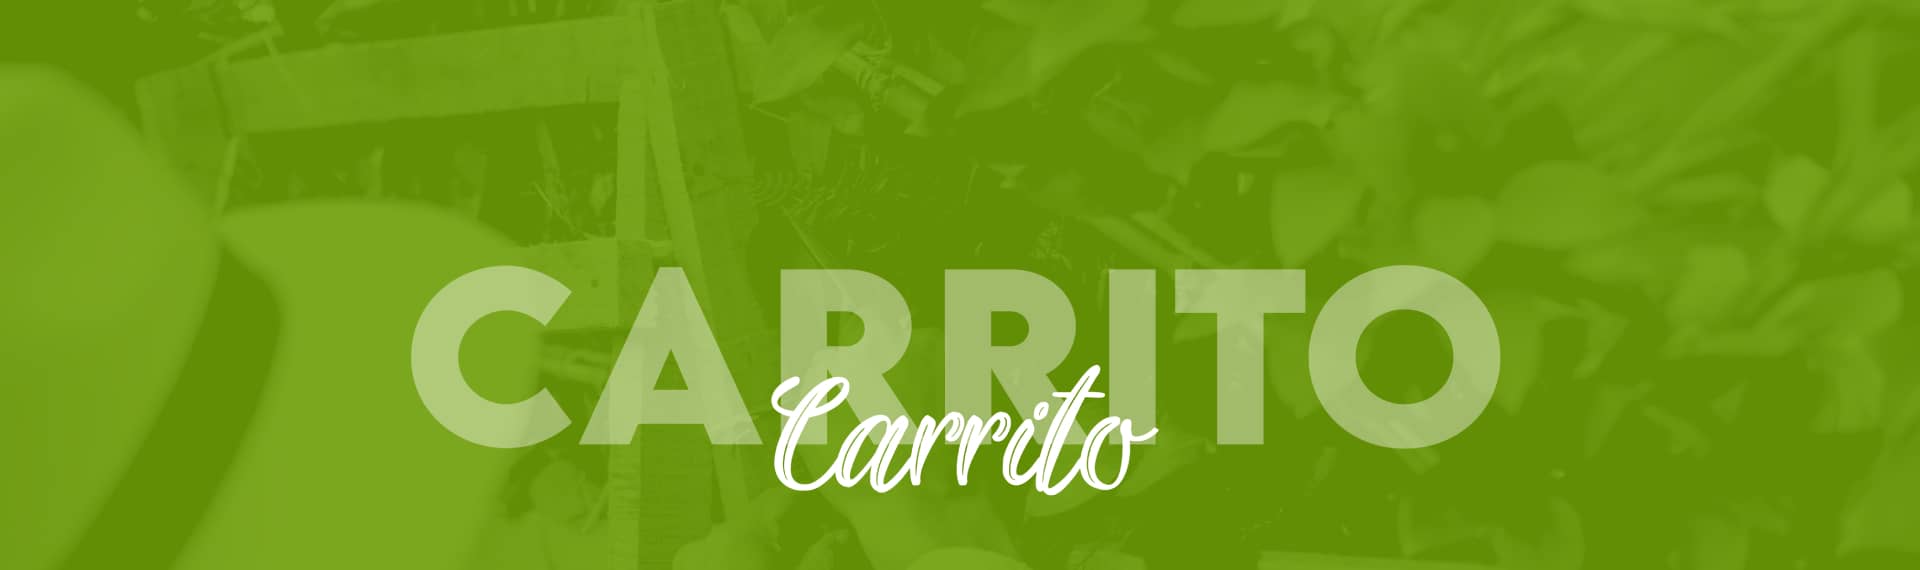 Banner Carrito - Silleteros Santa Elena